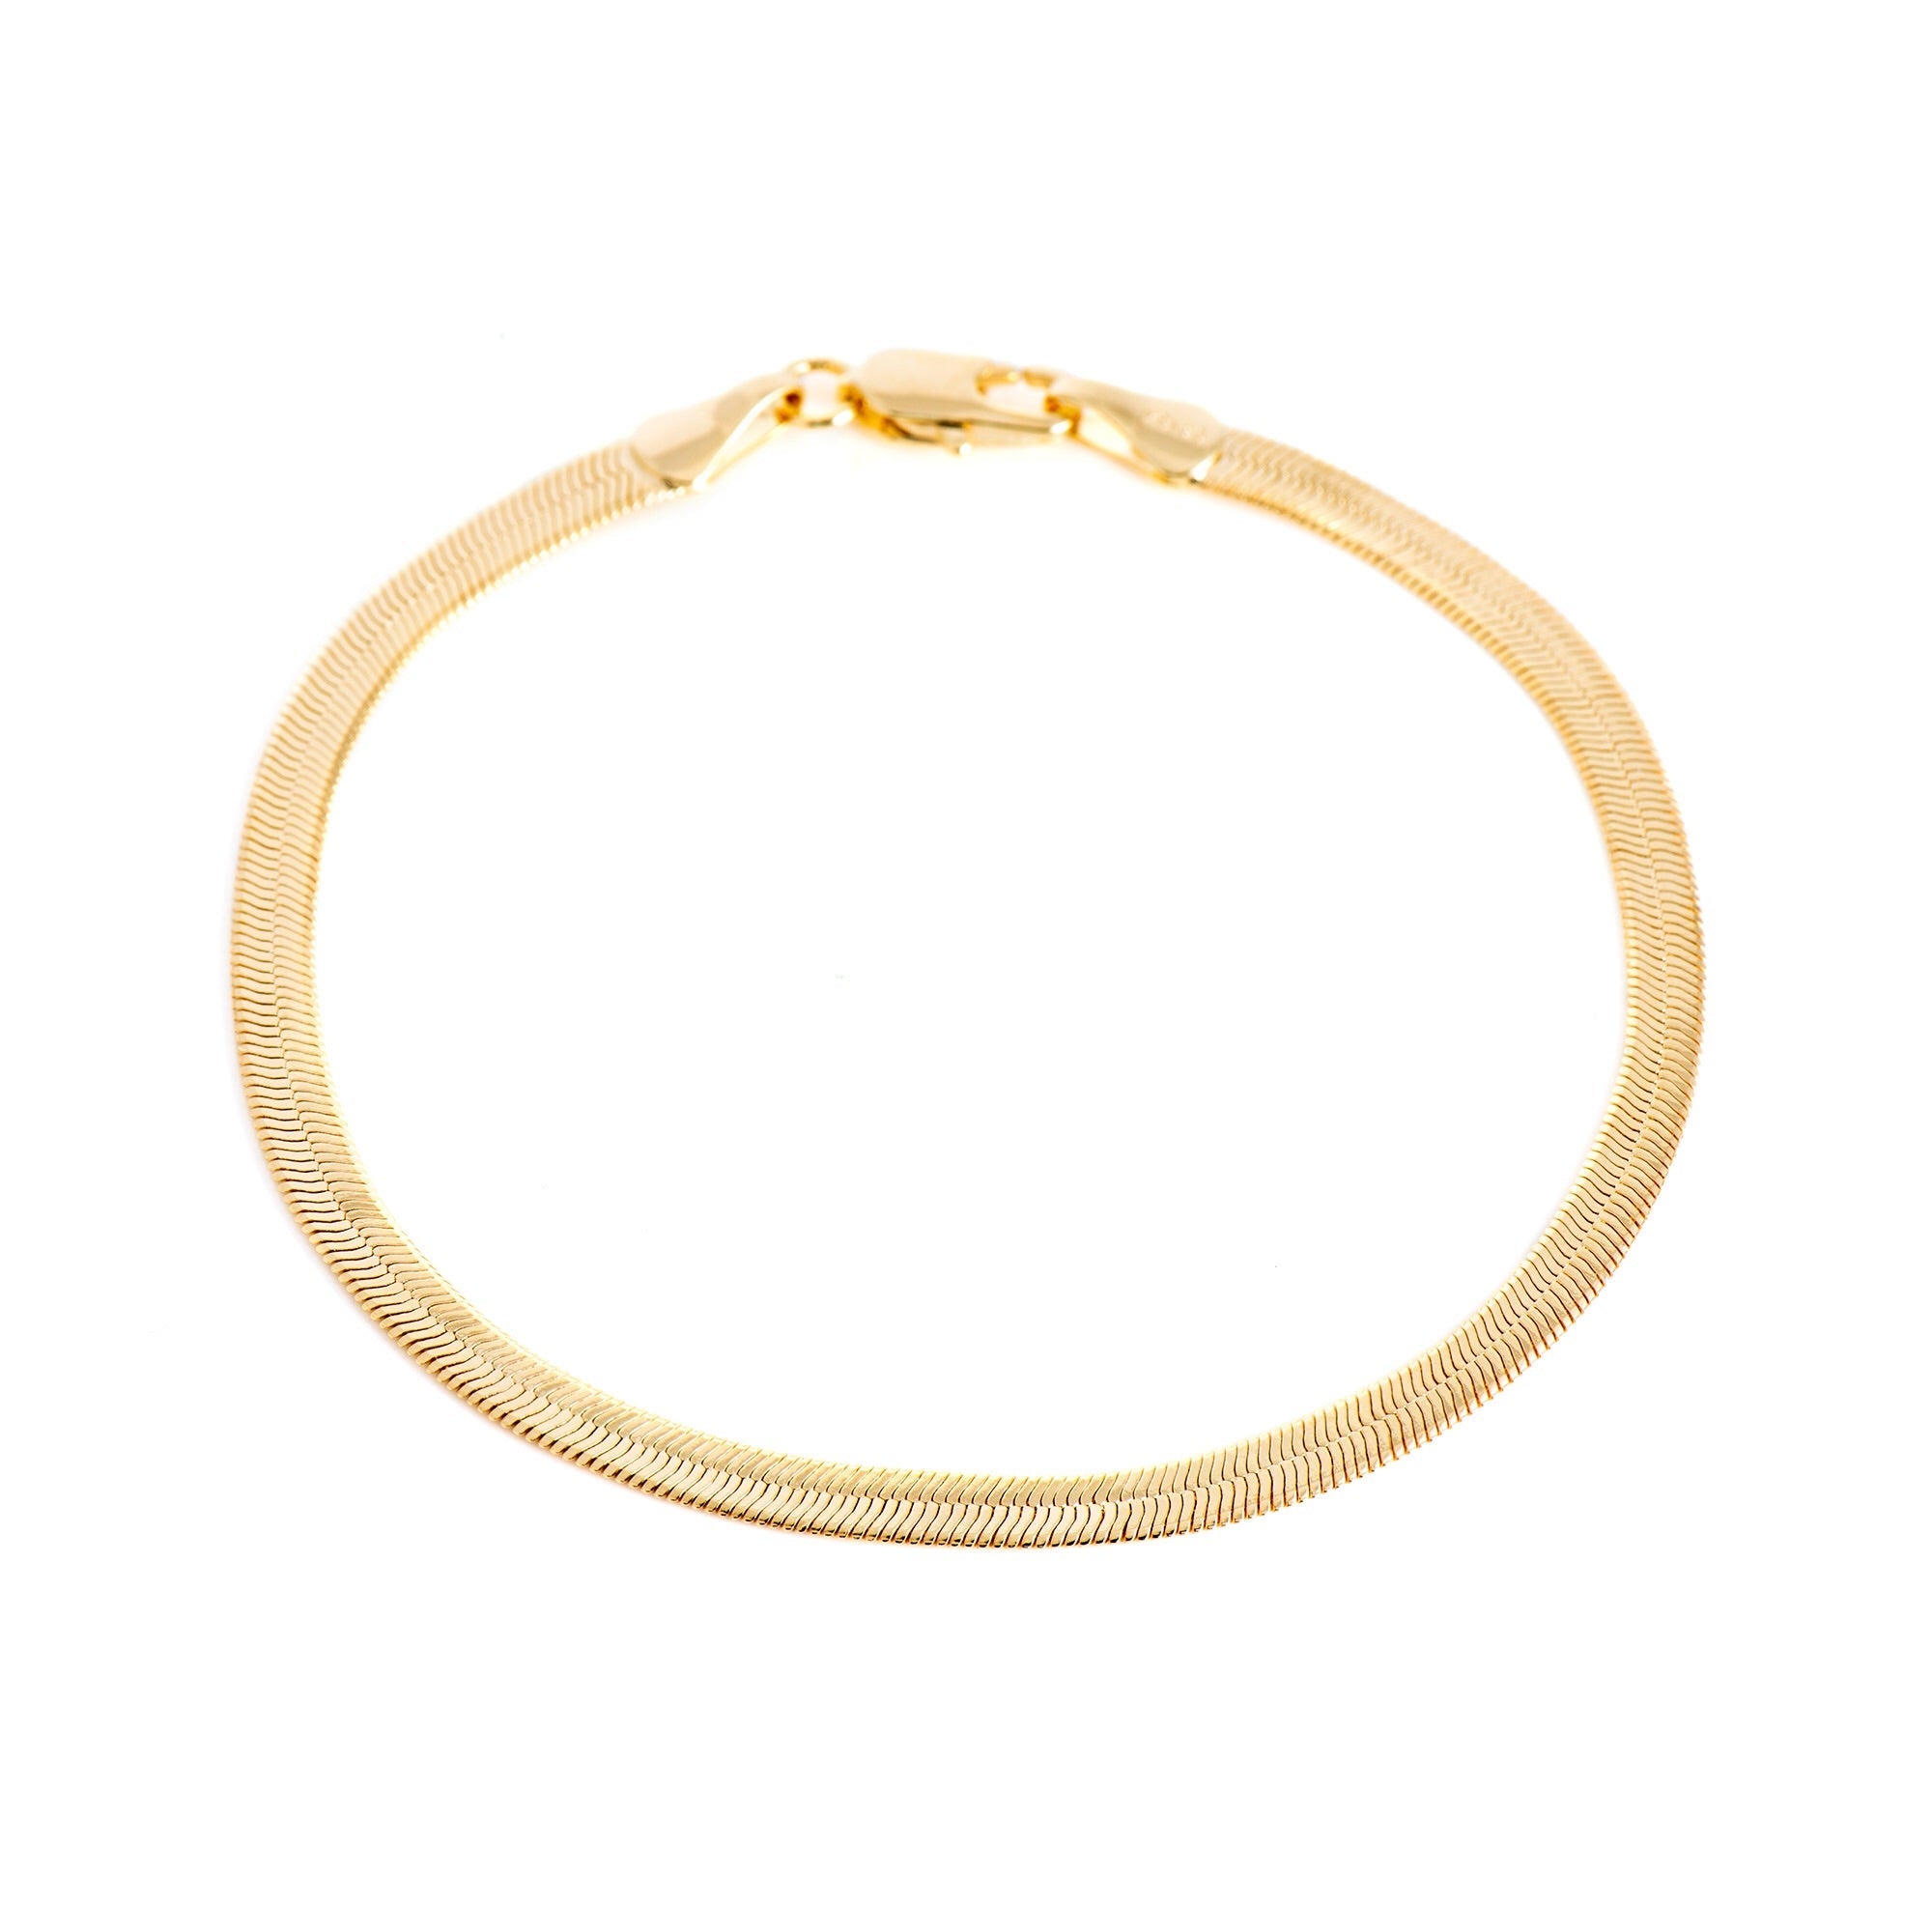 LOLO Herringbone 18K Gold Fill Bracelet